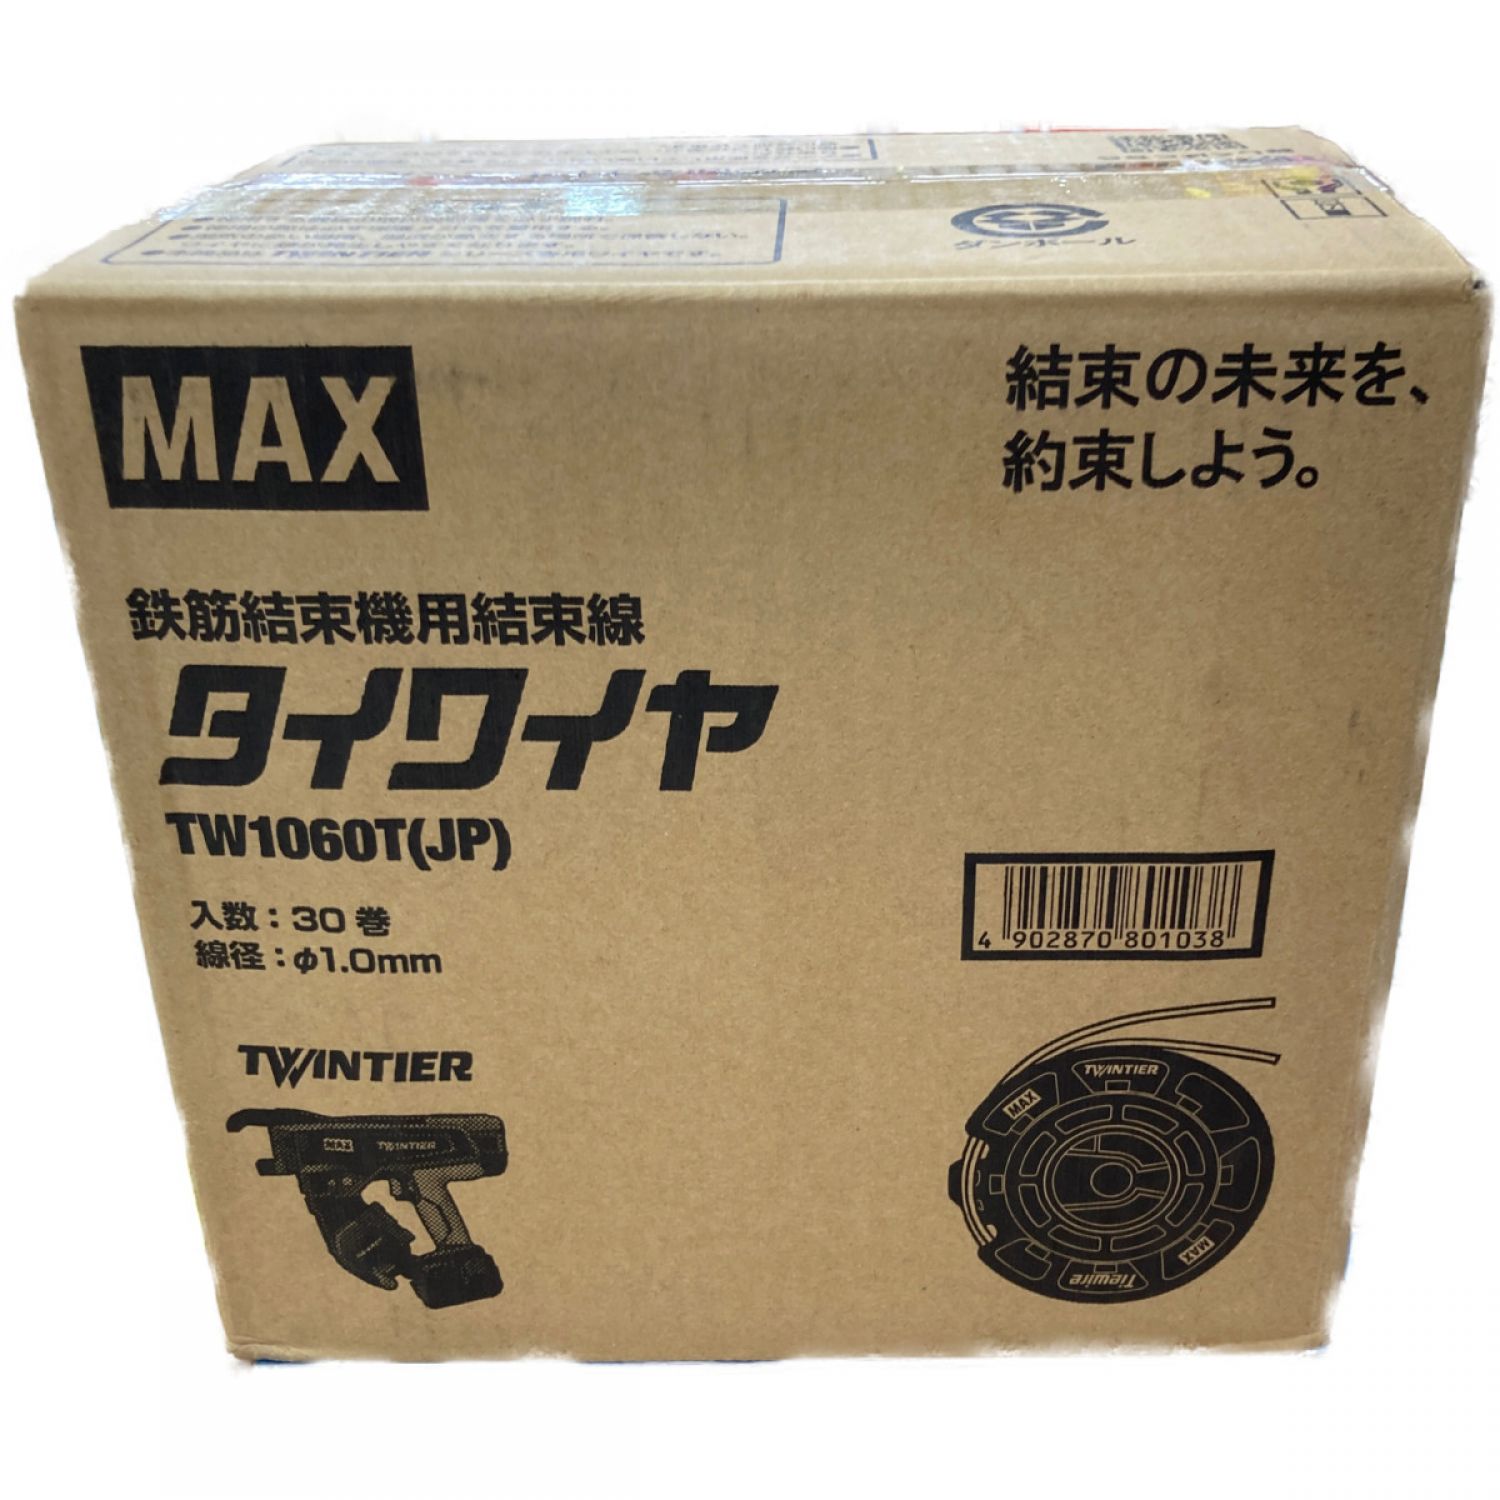 MAX ツイン 鉄筋結束機用結束線 タイワイヤ TW1060T www